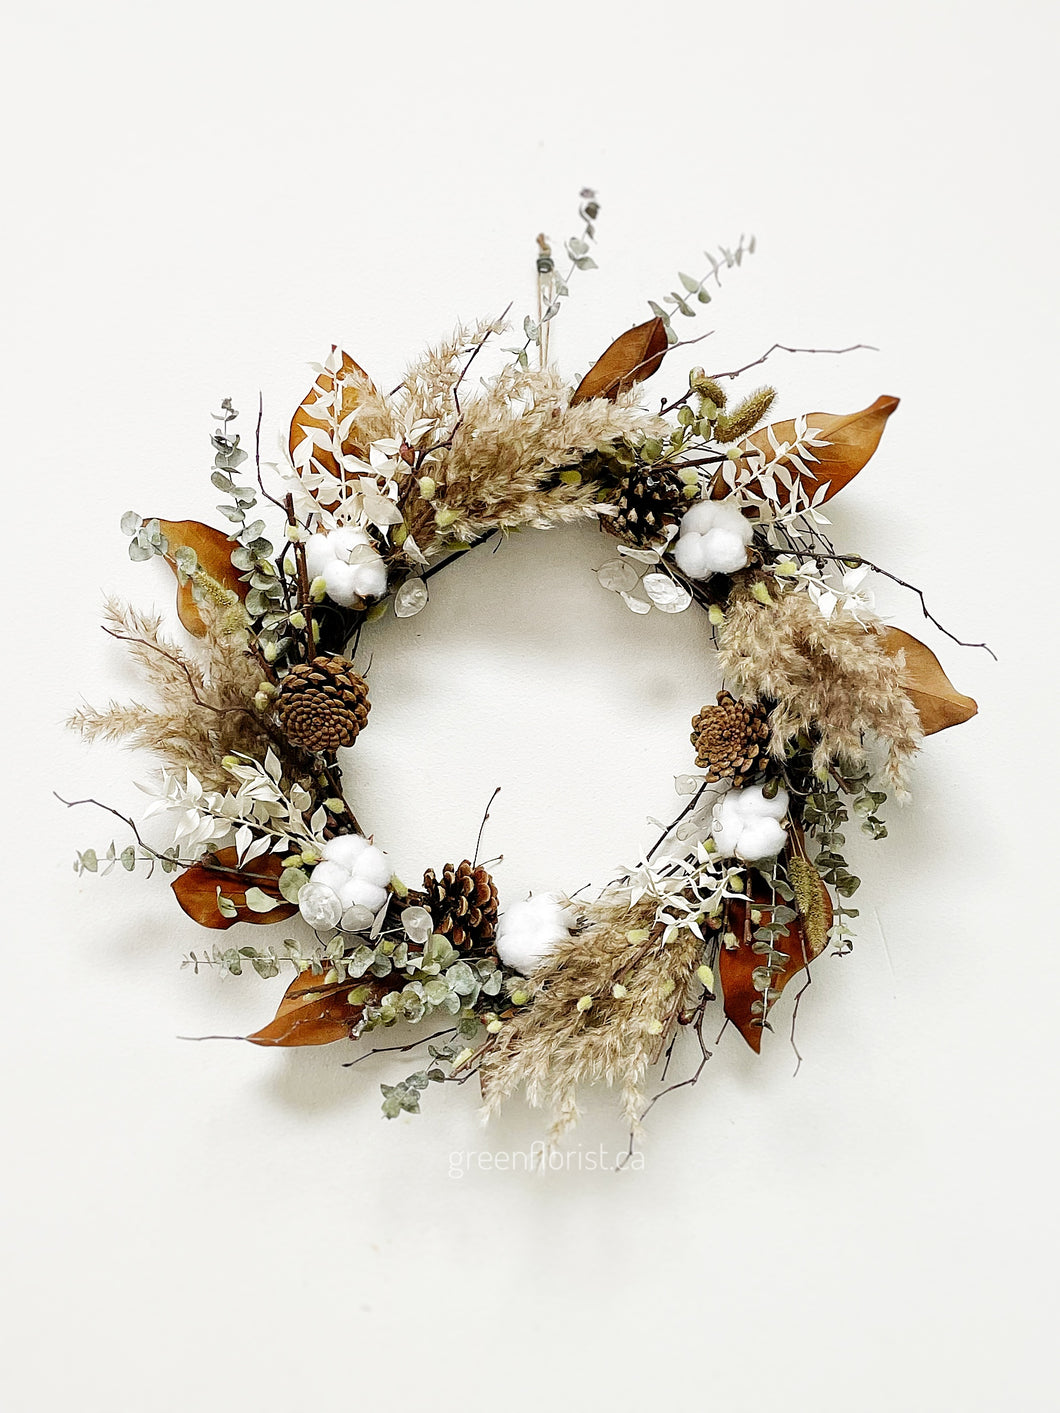 Dried Wreath - White and Neutral